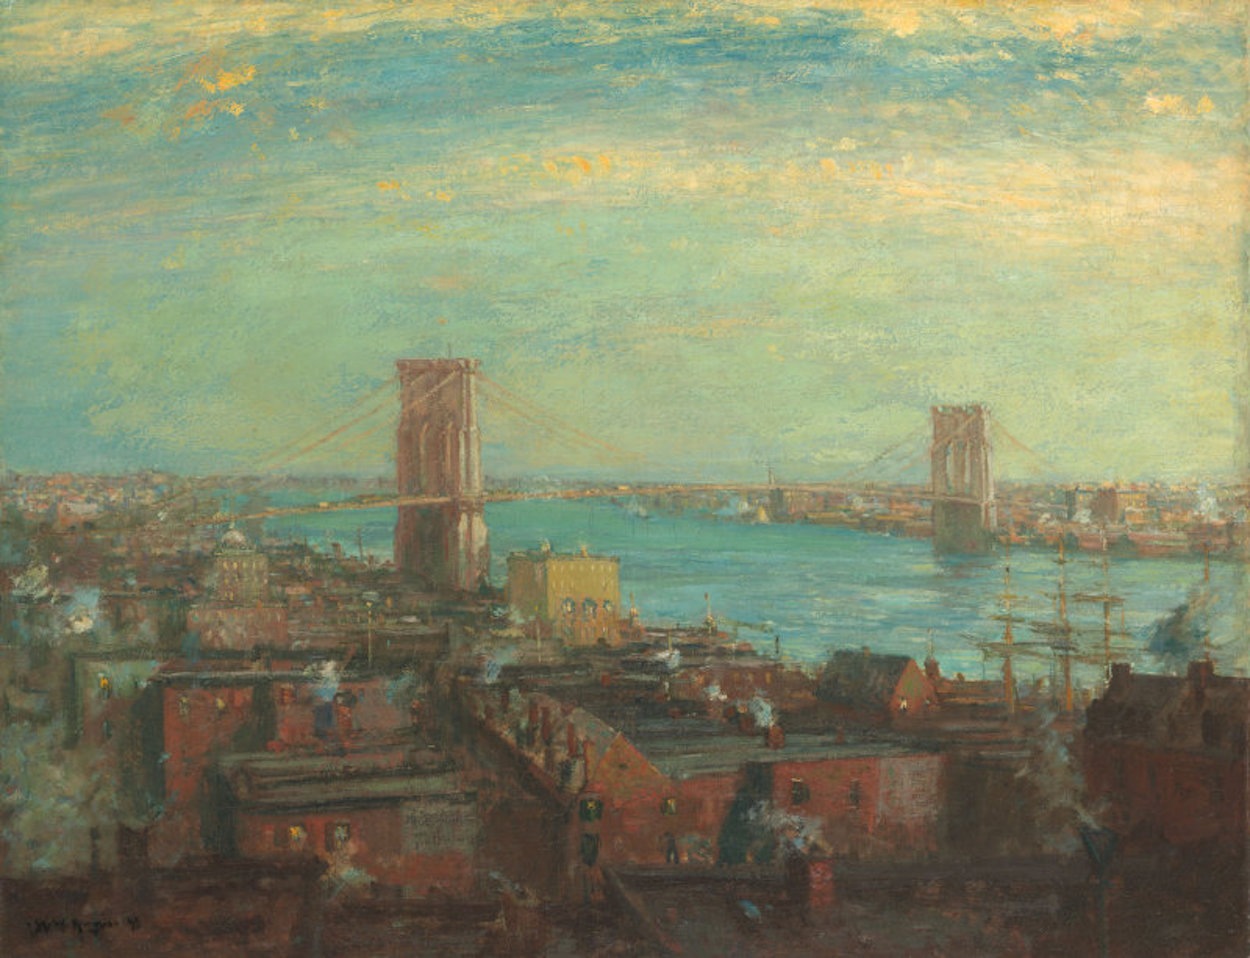 布鲁克林大桥 by Henry Ward Ranger - 1899 - 28 1/2 x 36 1/8 in 